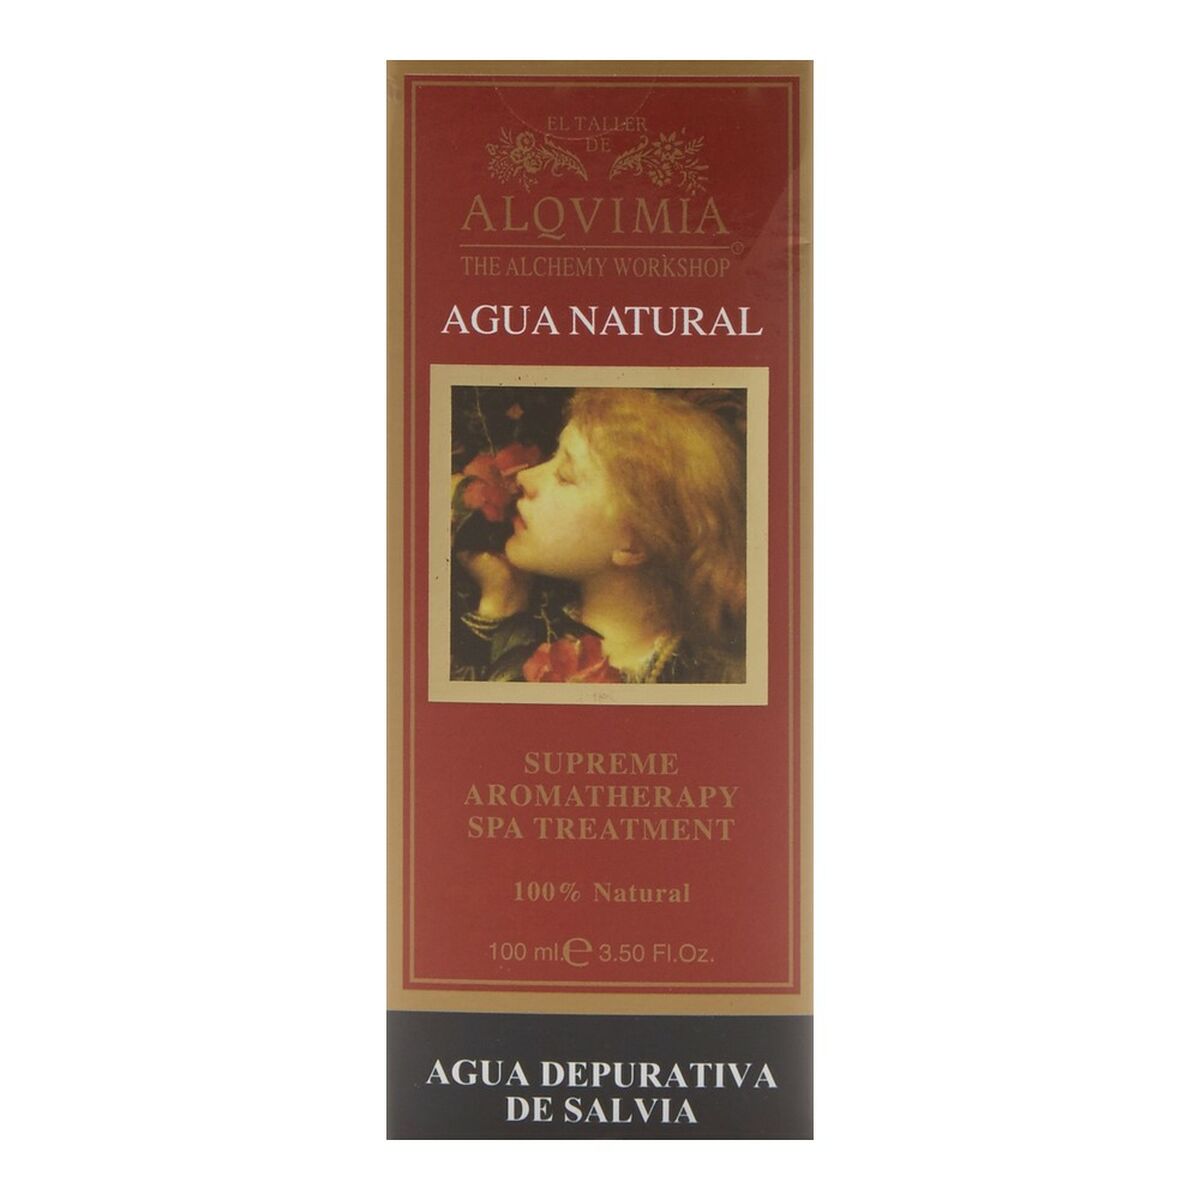 Profumo Donna Alqvimia EDC Agua Depurativa de Salvia (100 ml)